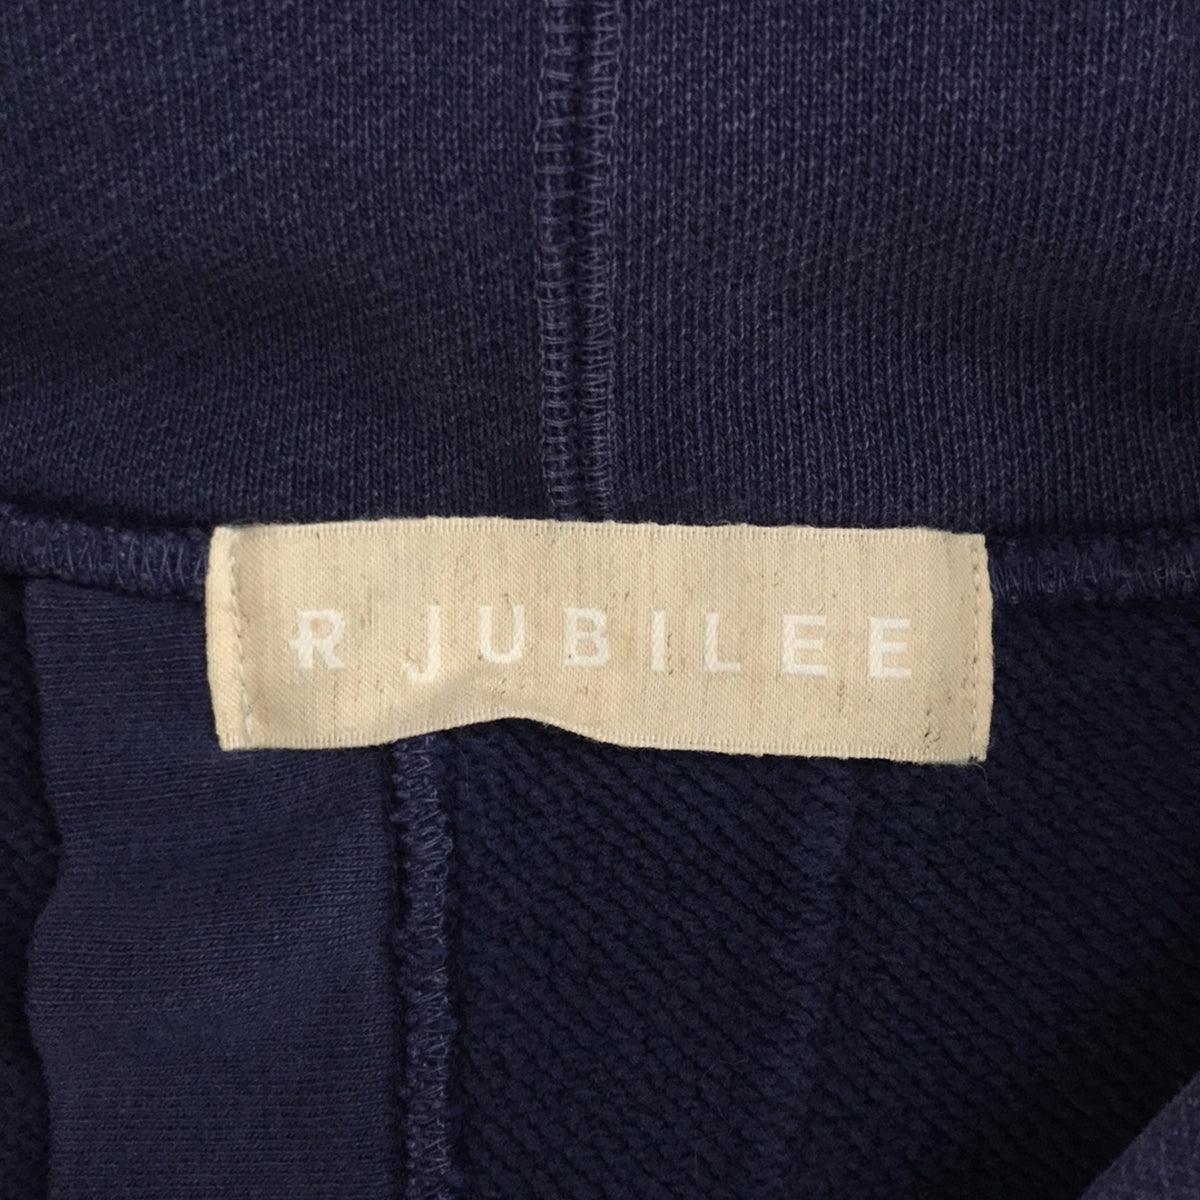 R JUBILEE / アールジュビリー | Back Open Sweat / 染め加工 バックオープンスウェット パーカー | F | MIDNIGHT BLUE | レディース